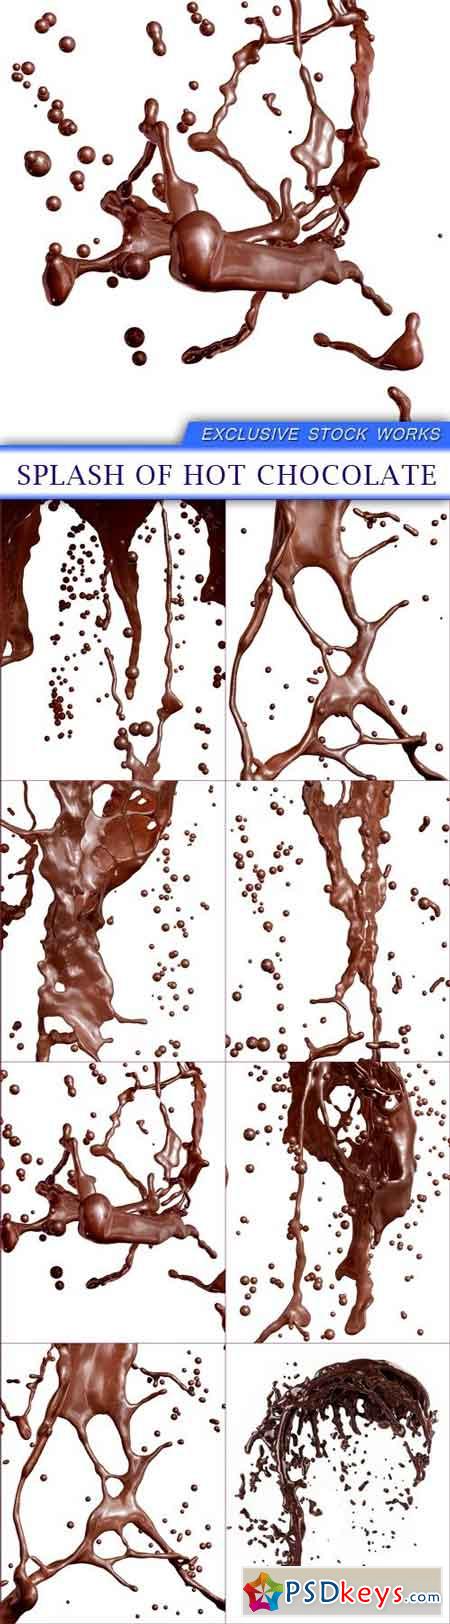 Splash of Hot Chocolate 8X JPEG